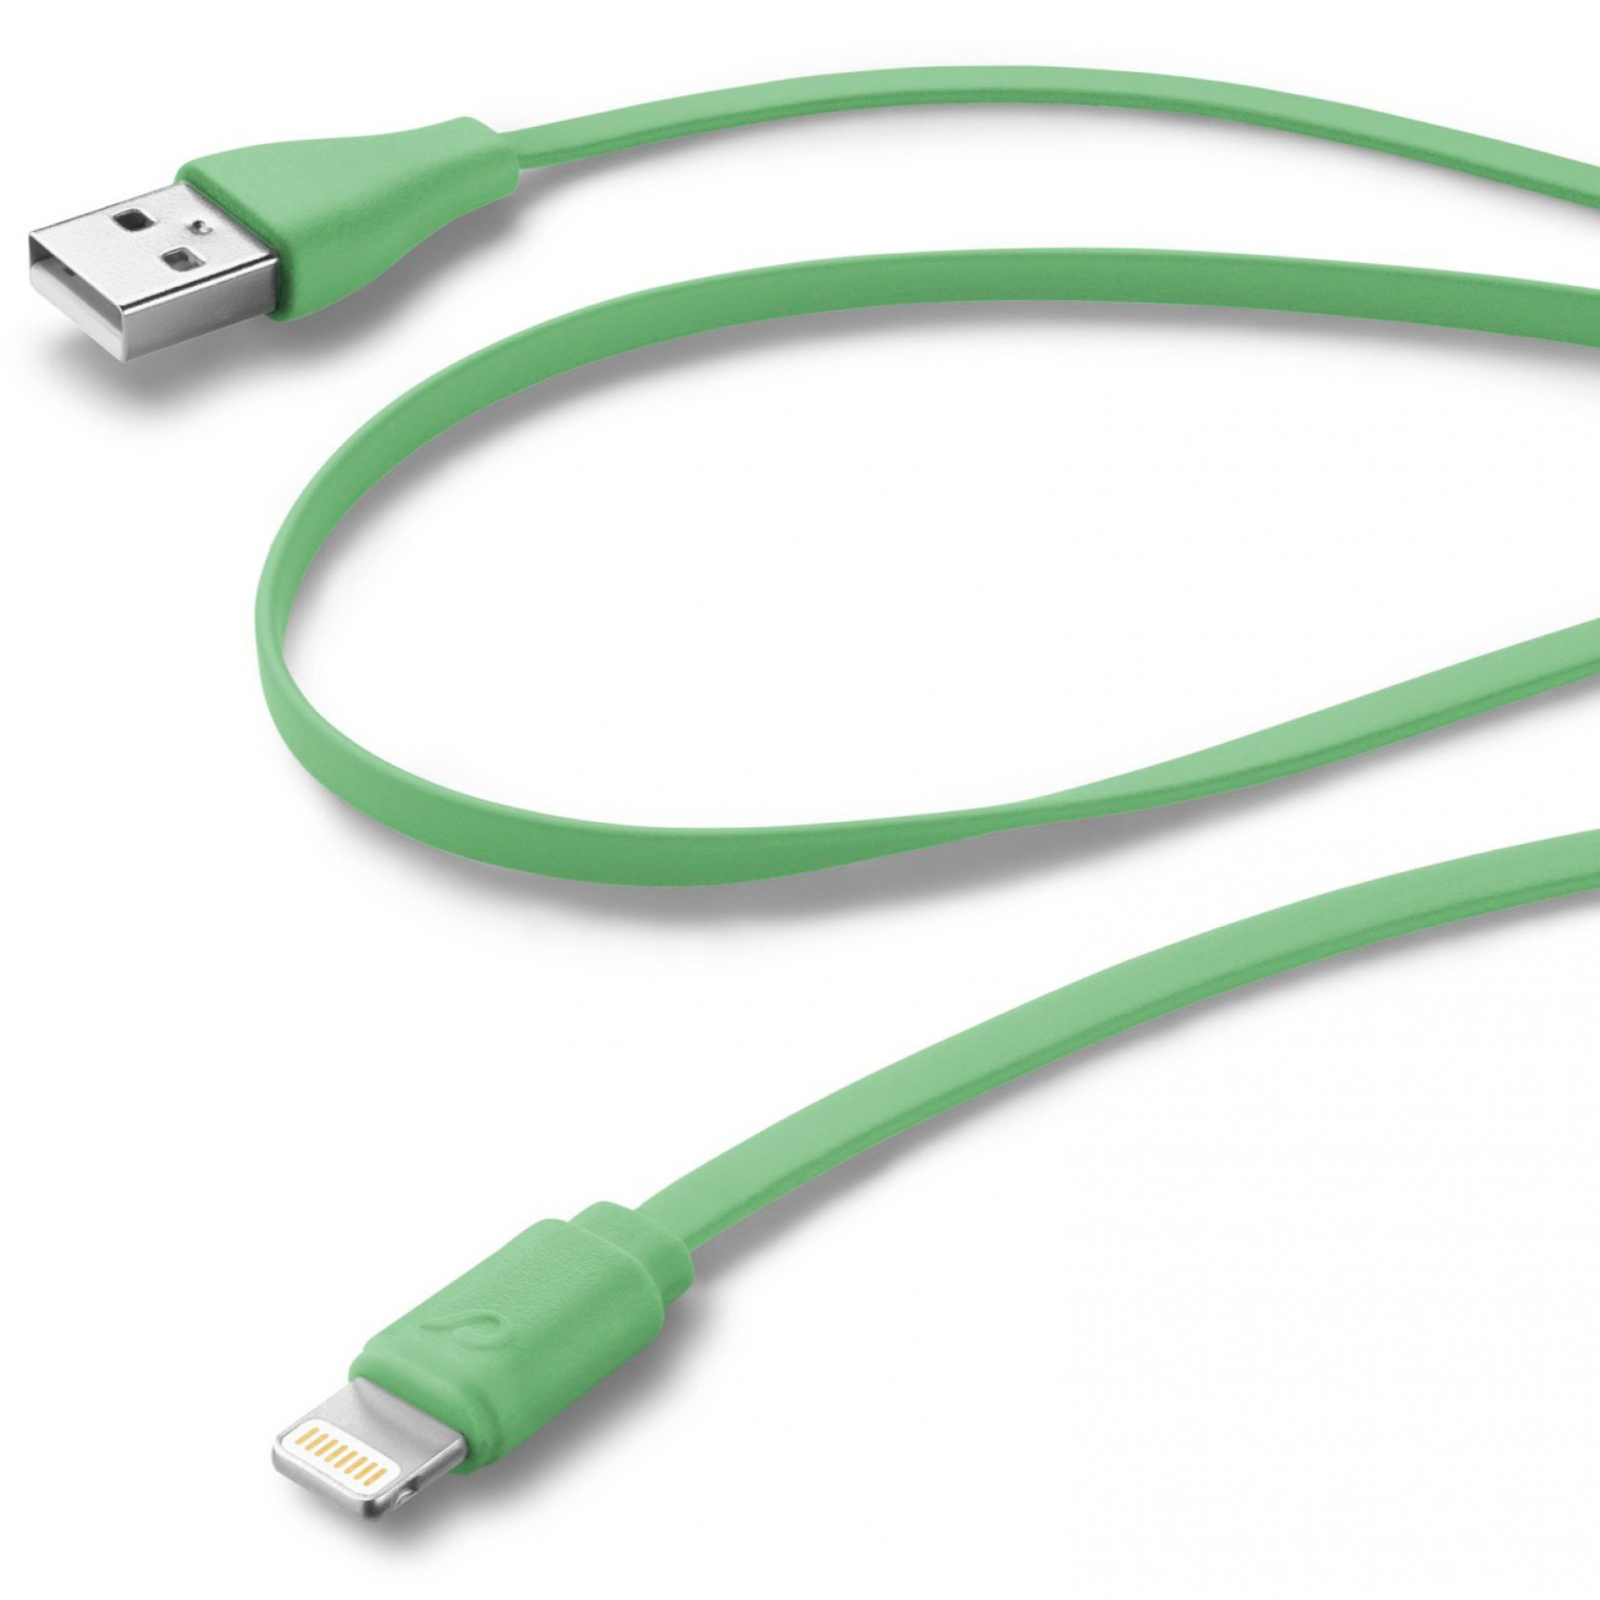 Дата кабель USB 2.0 AM to Lightning 1.0m pink Cellularline (USBDATACFLMFIIPH5P) зображення 2